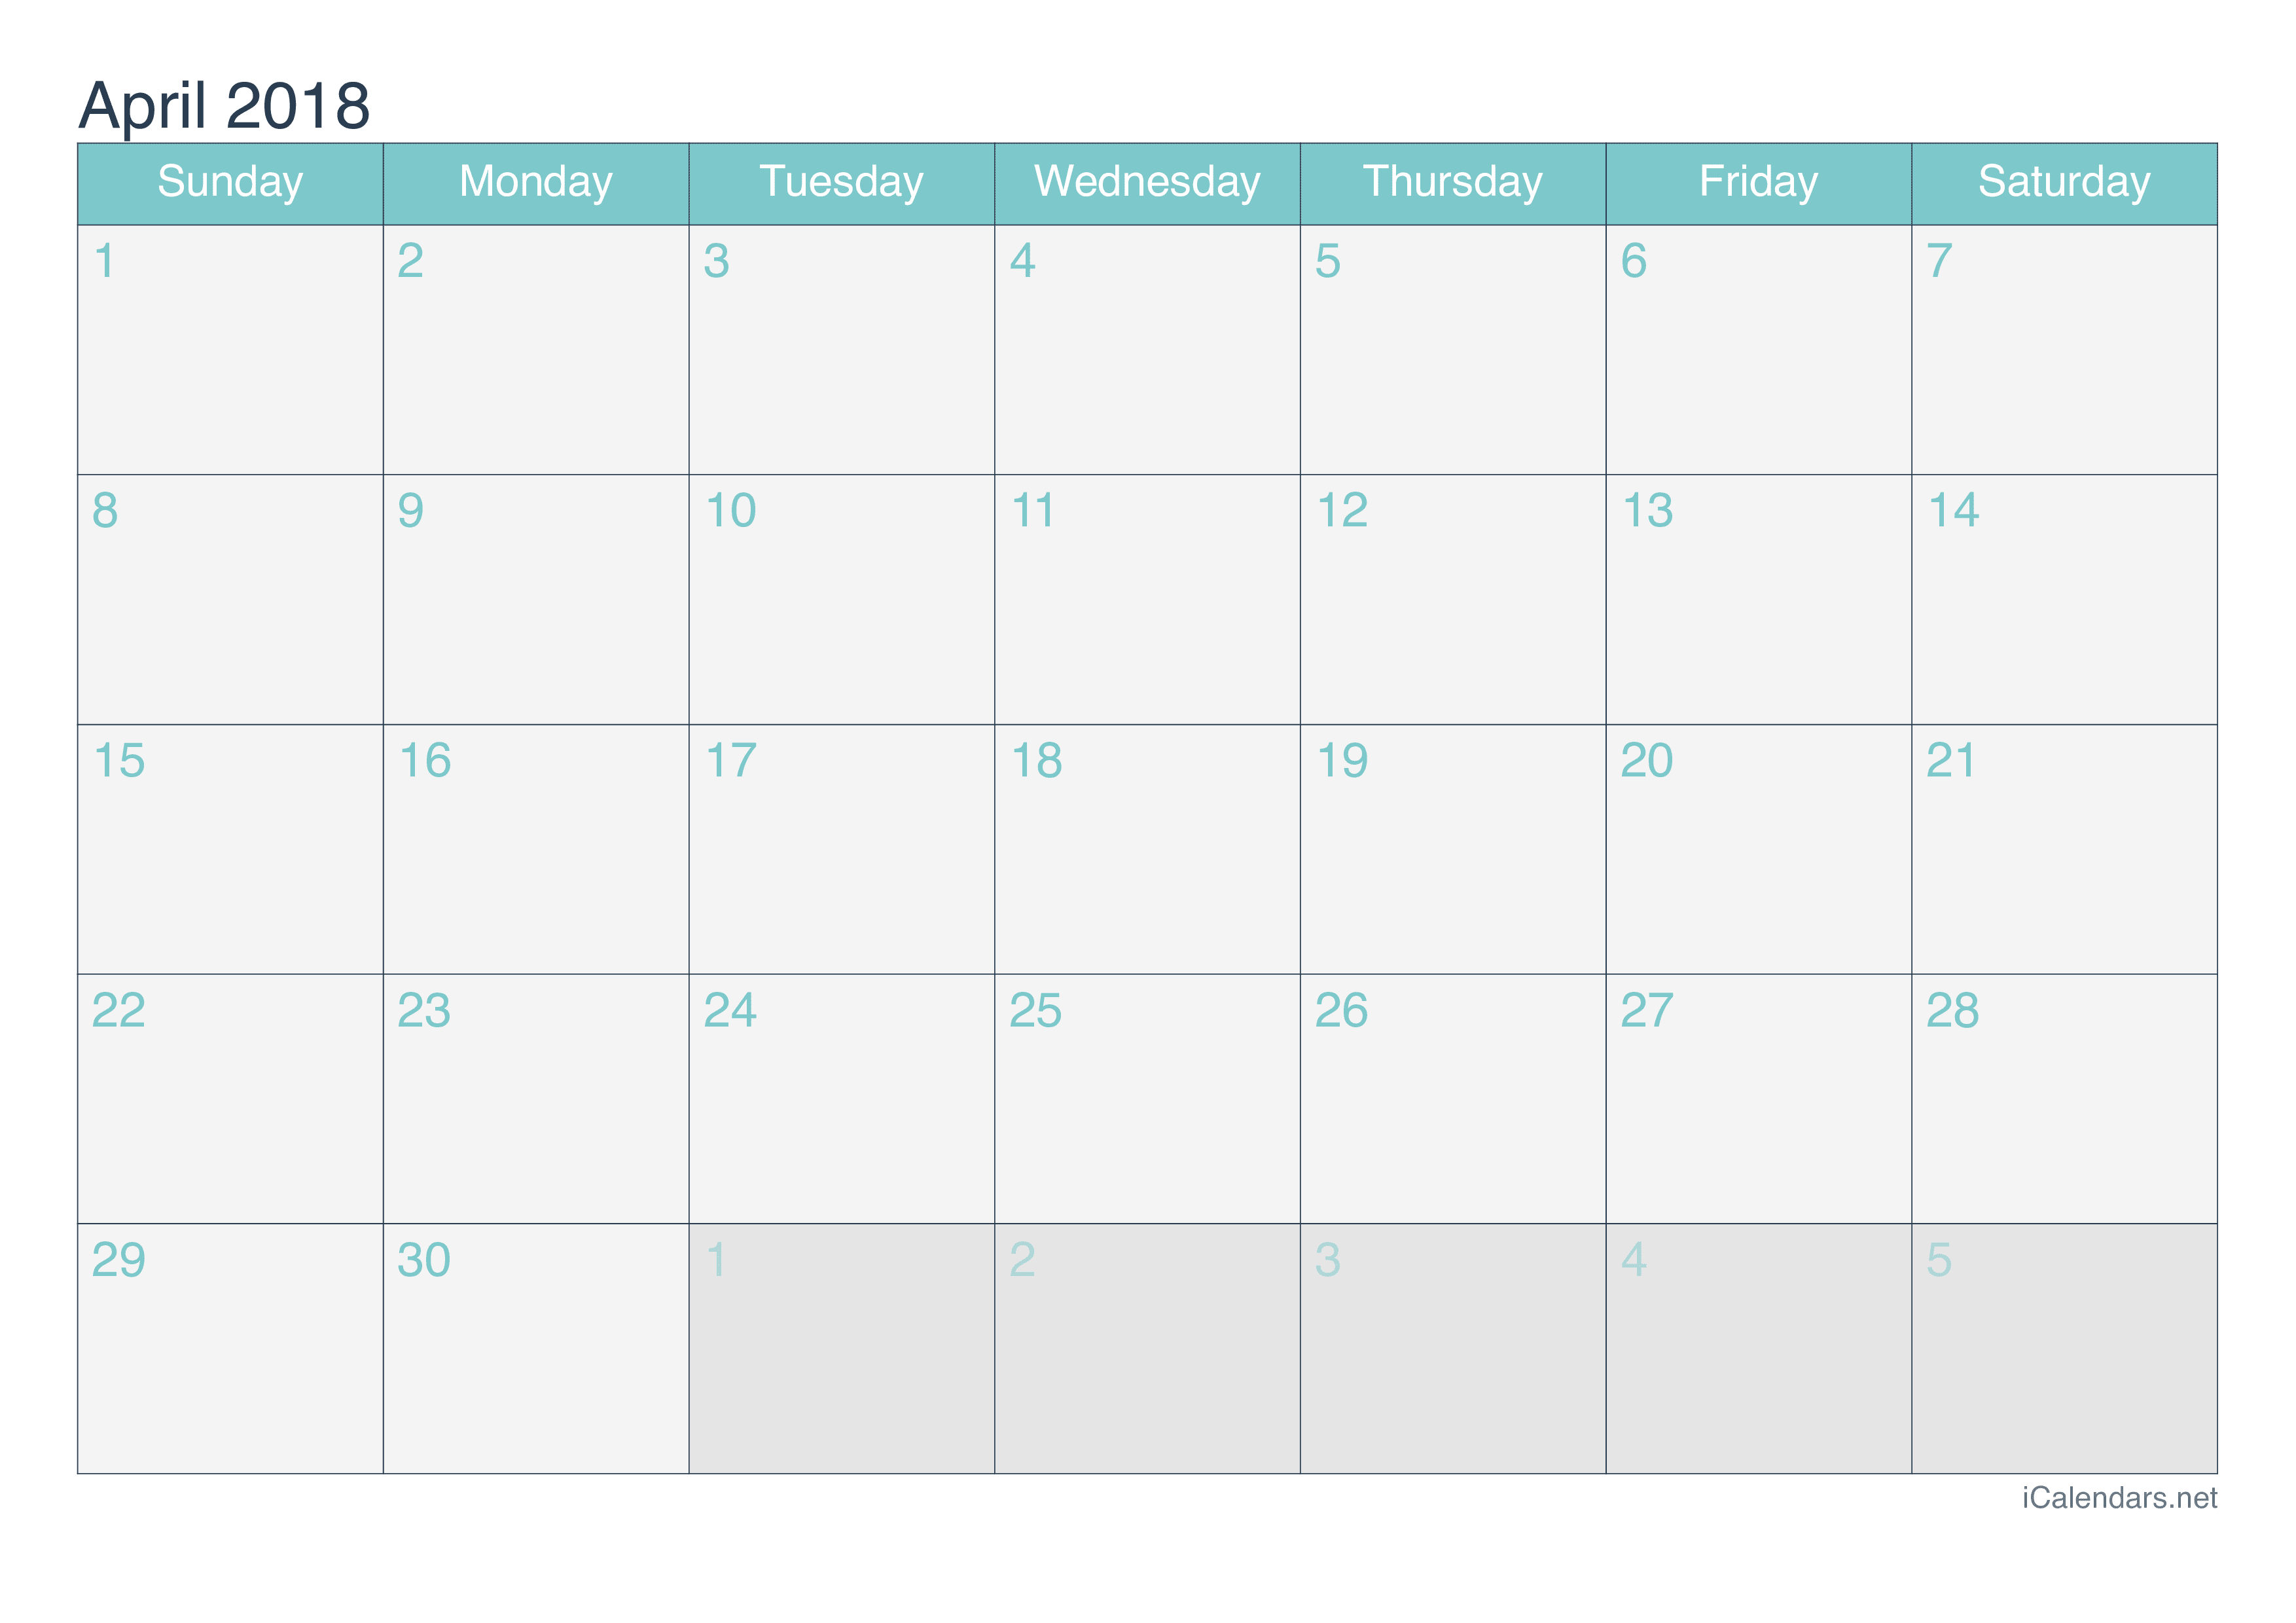 april-2018-calendar-template-http-socialebuzz-april-2018-calendar-printable-template